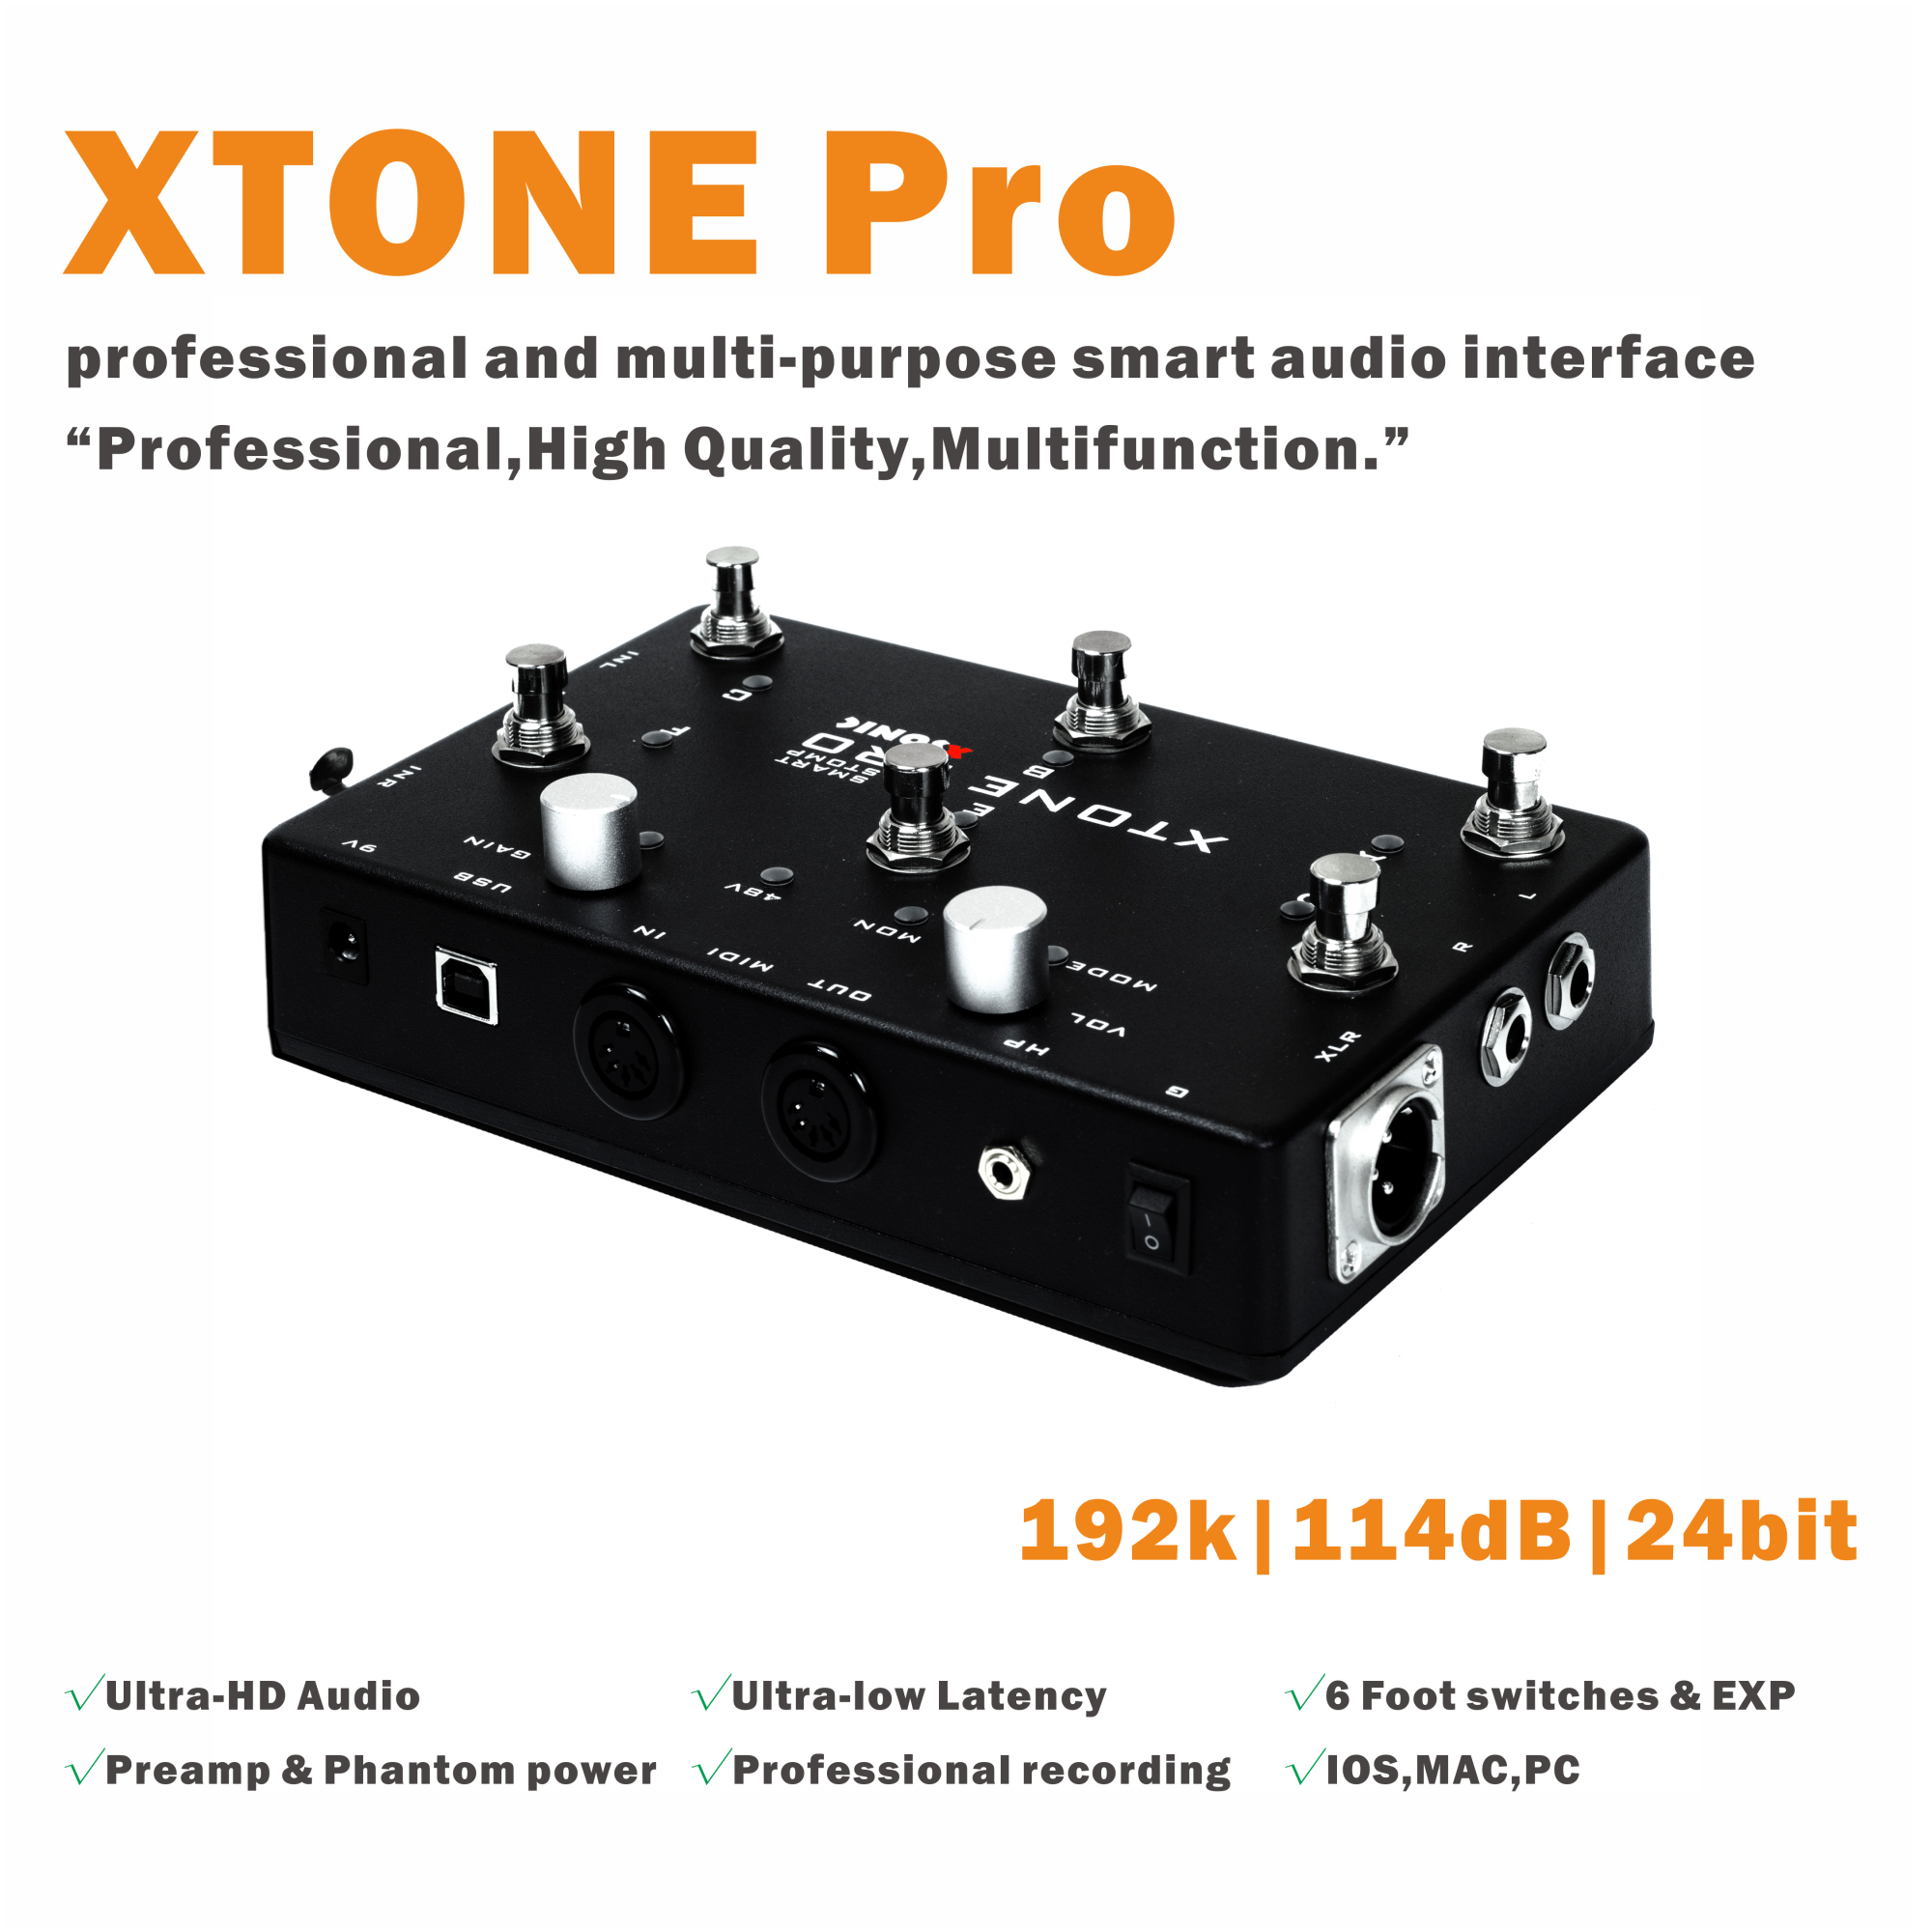 Xtone Pro. Guitar Midi Controller. Xton Pro XSONIC. Xtone Duo. X tone